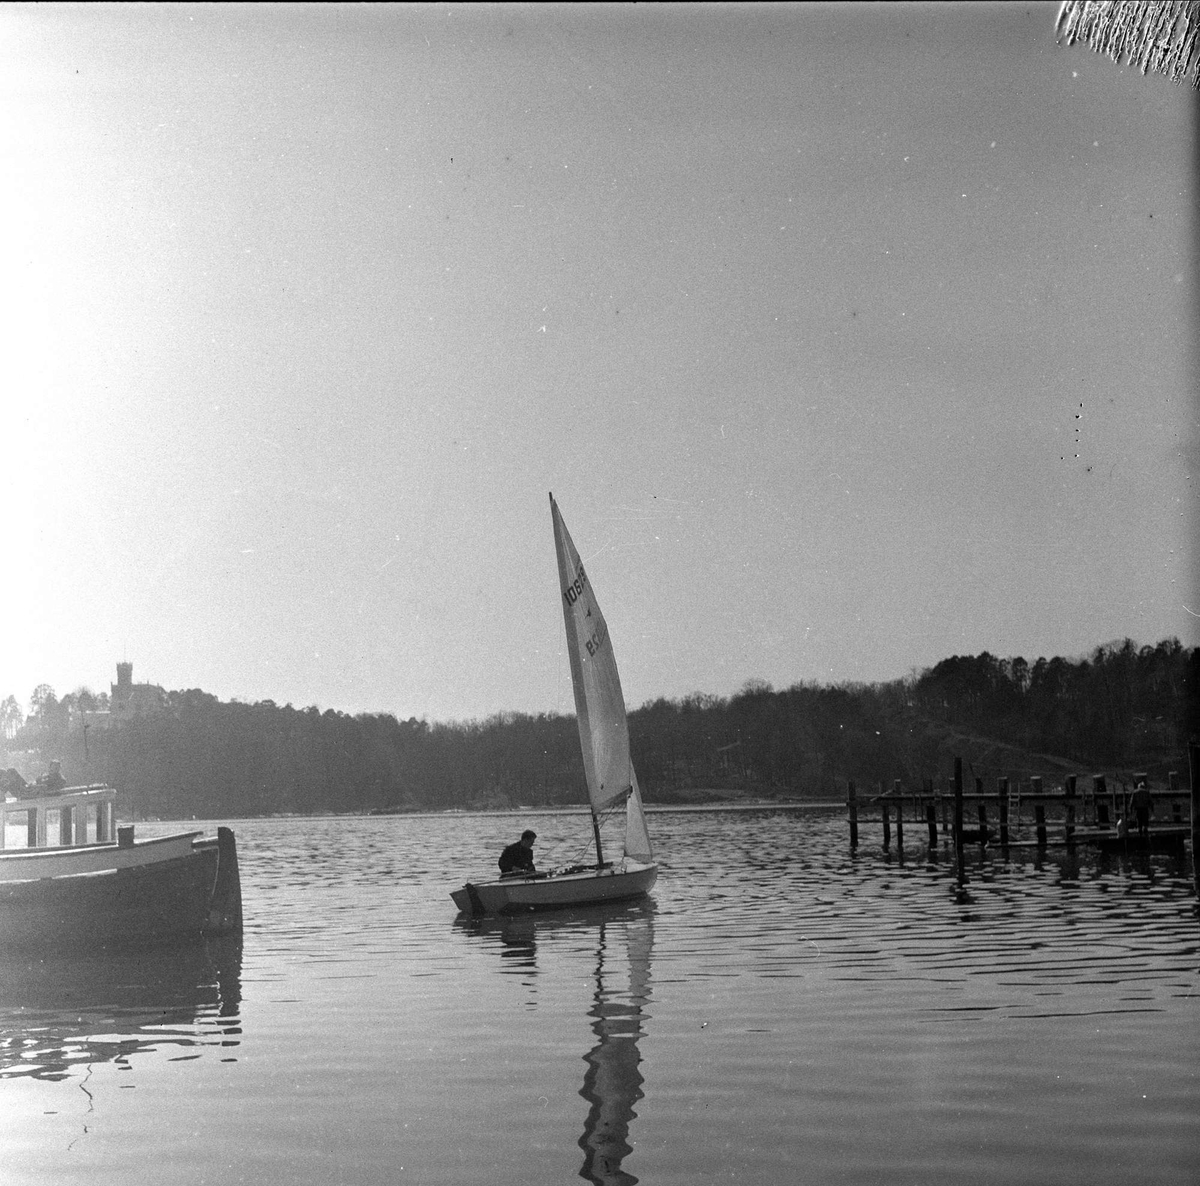 Mann i seilbåt, Frognerkilen, Oslo, 12.04.1959